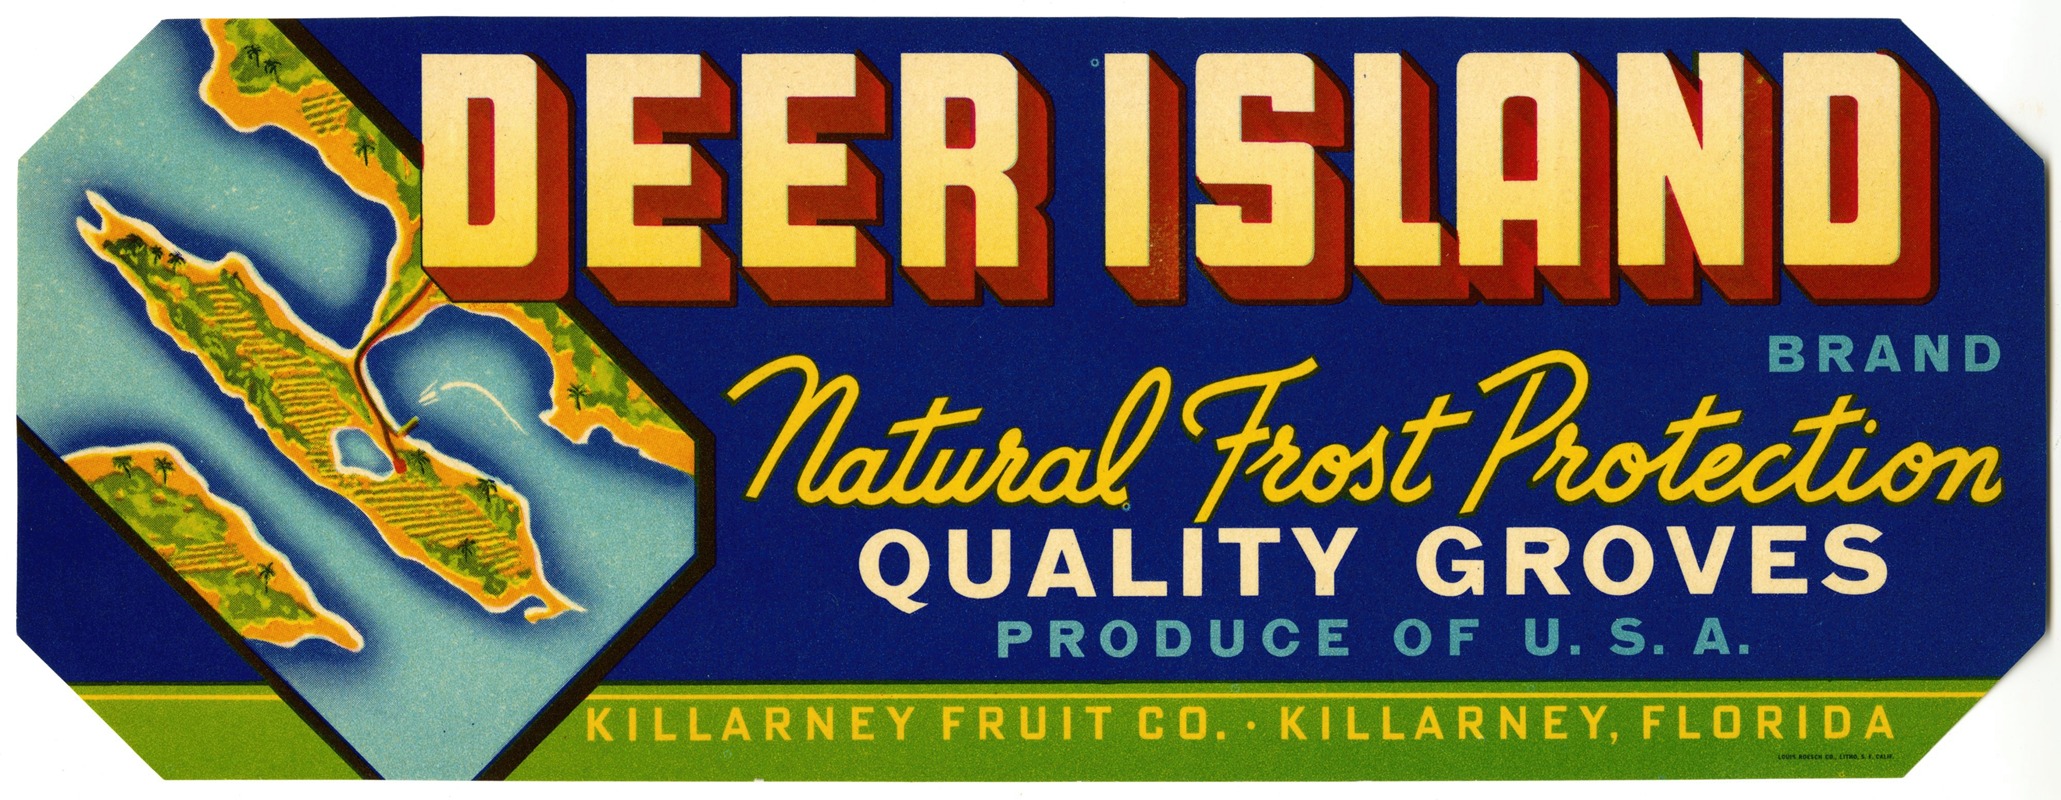 Anonymous - Deer Island Brand Citrus Label